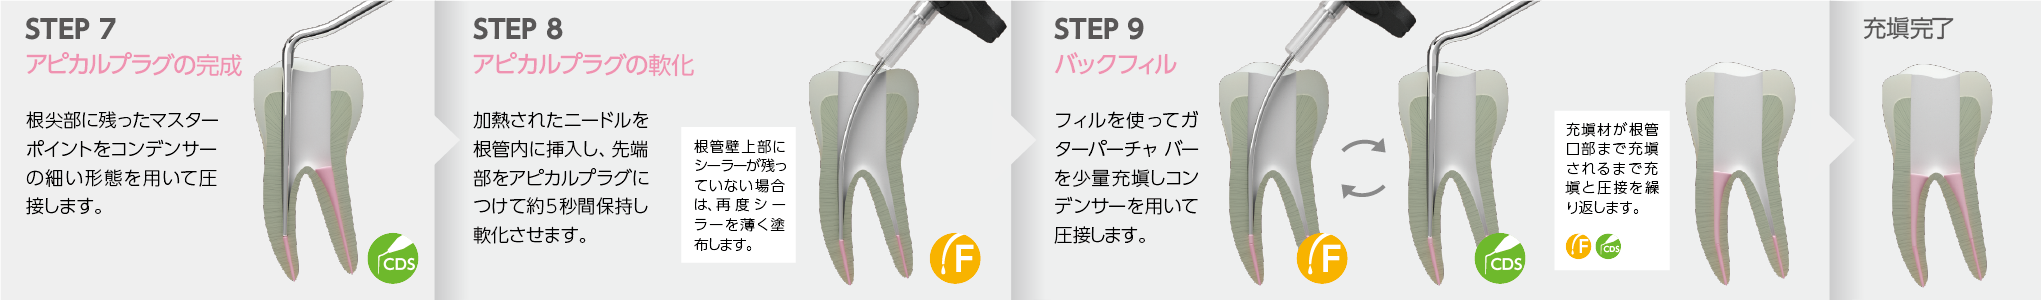 STEP7〜STEP9